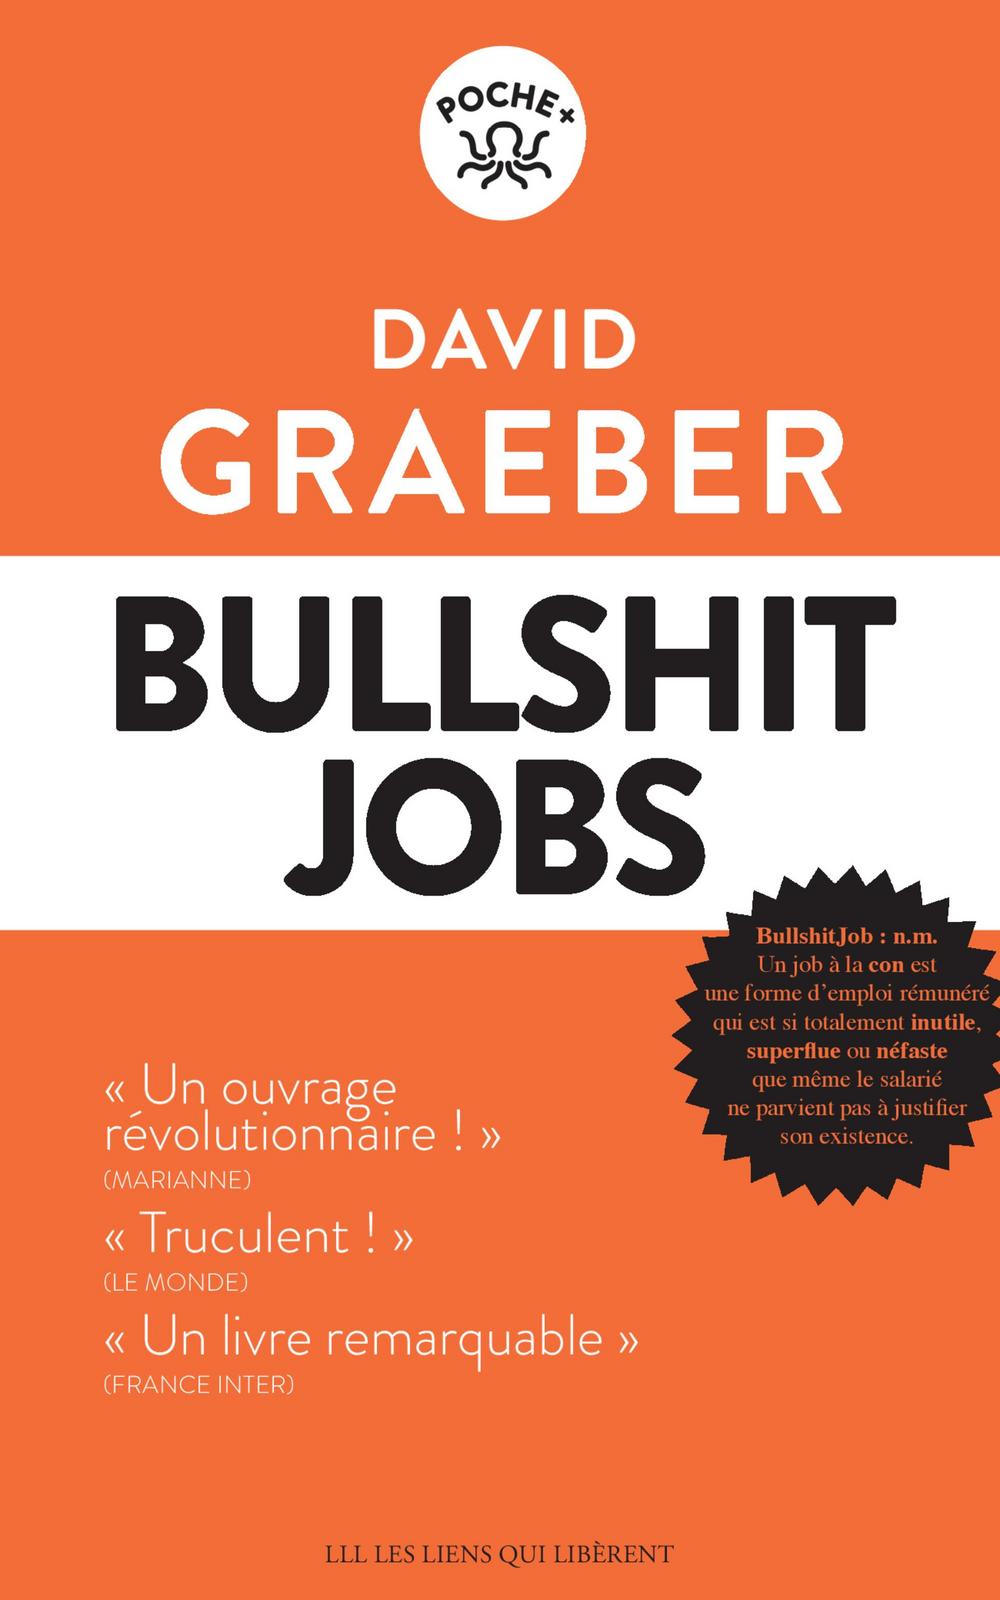 Bullshit jobs (French language, 2019, Les liens qui libèrent)